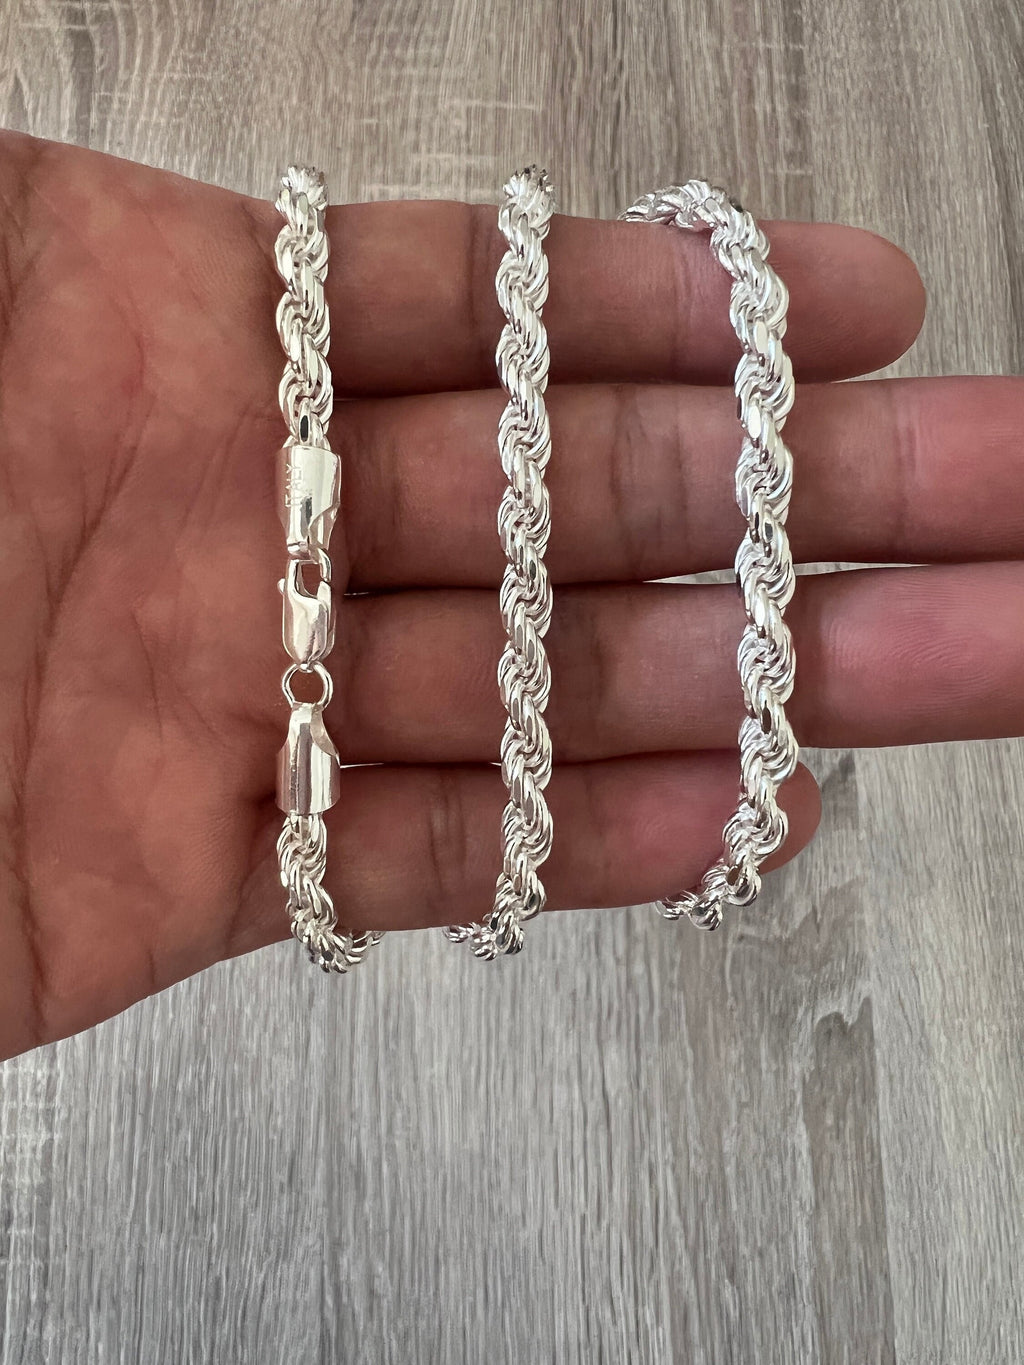 Silver Mens Bracelet 5MM Rope Chain Bracelet Link Fathers 